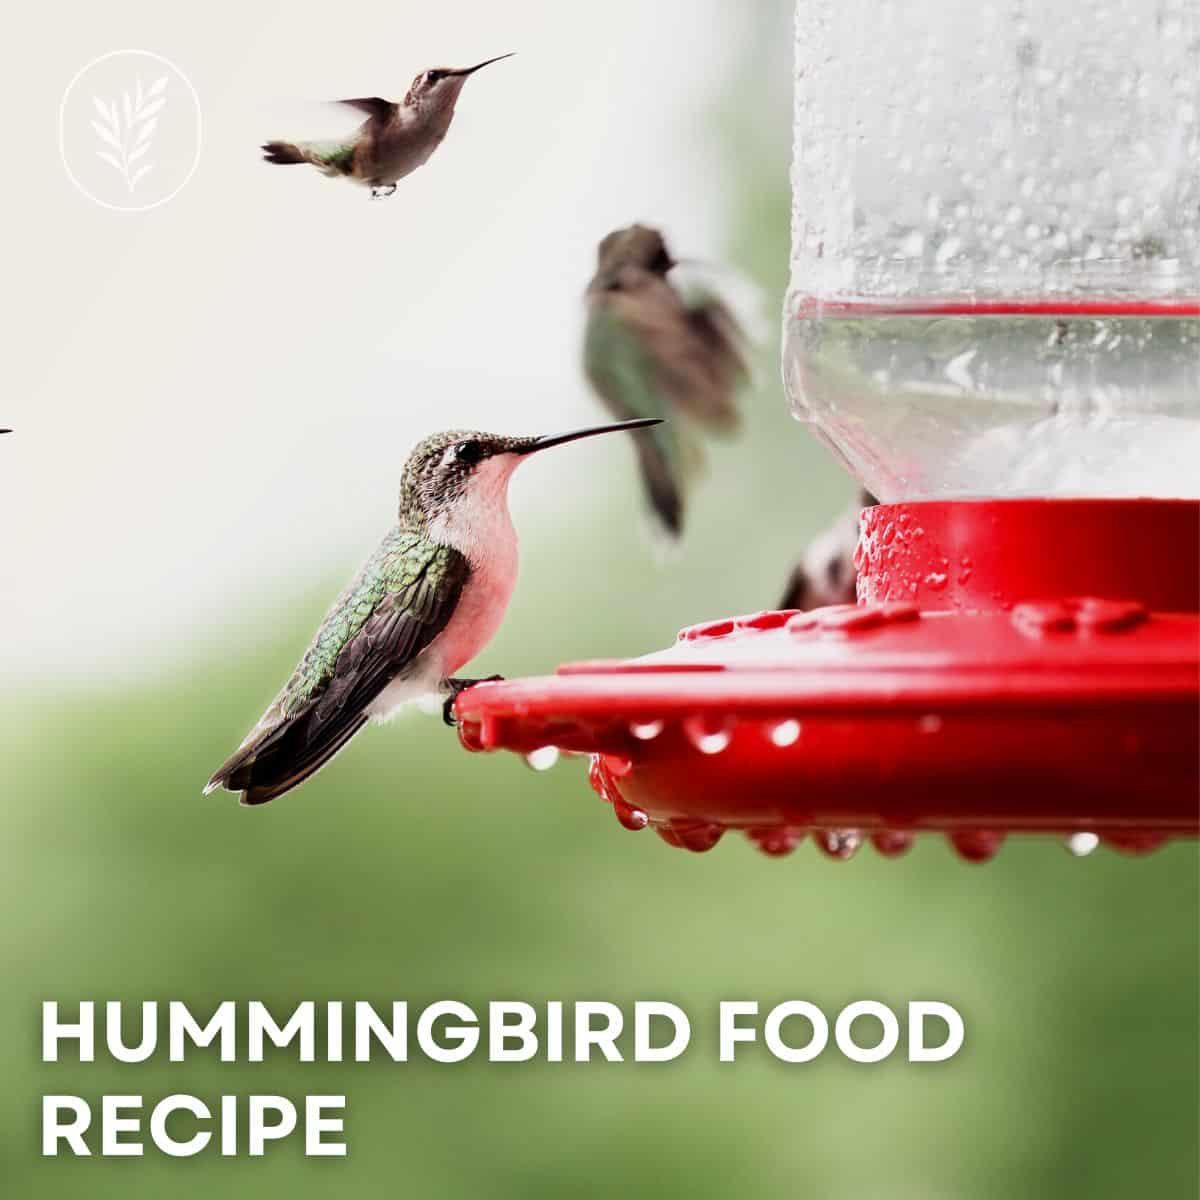 Hummingbird food recipe via @home4theharvest